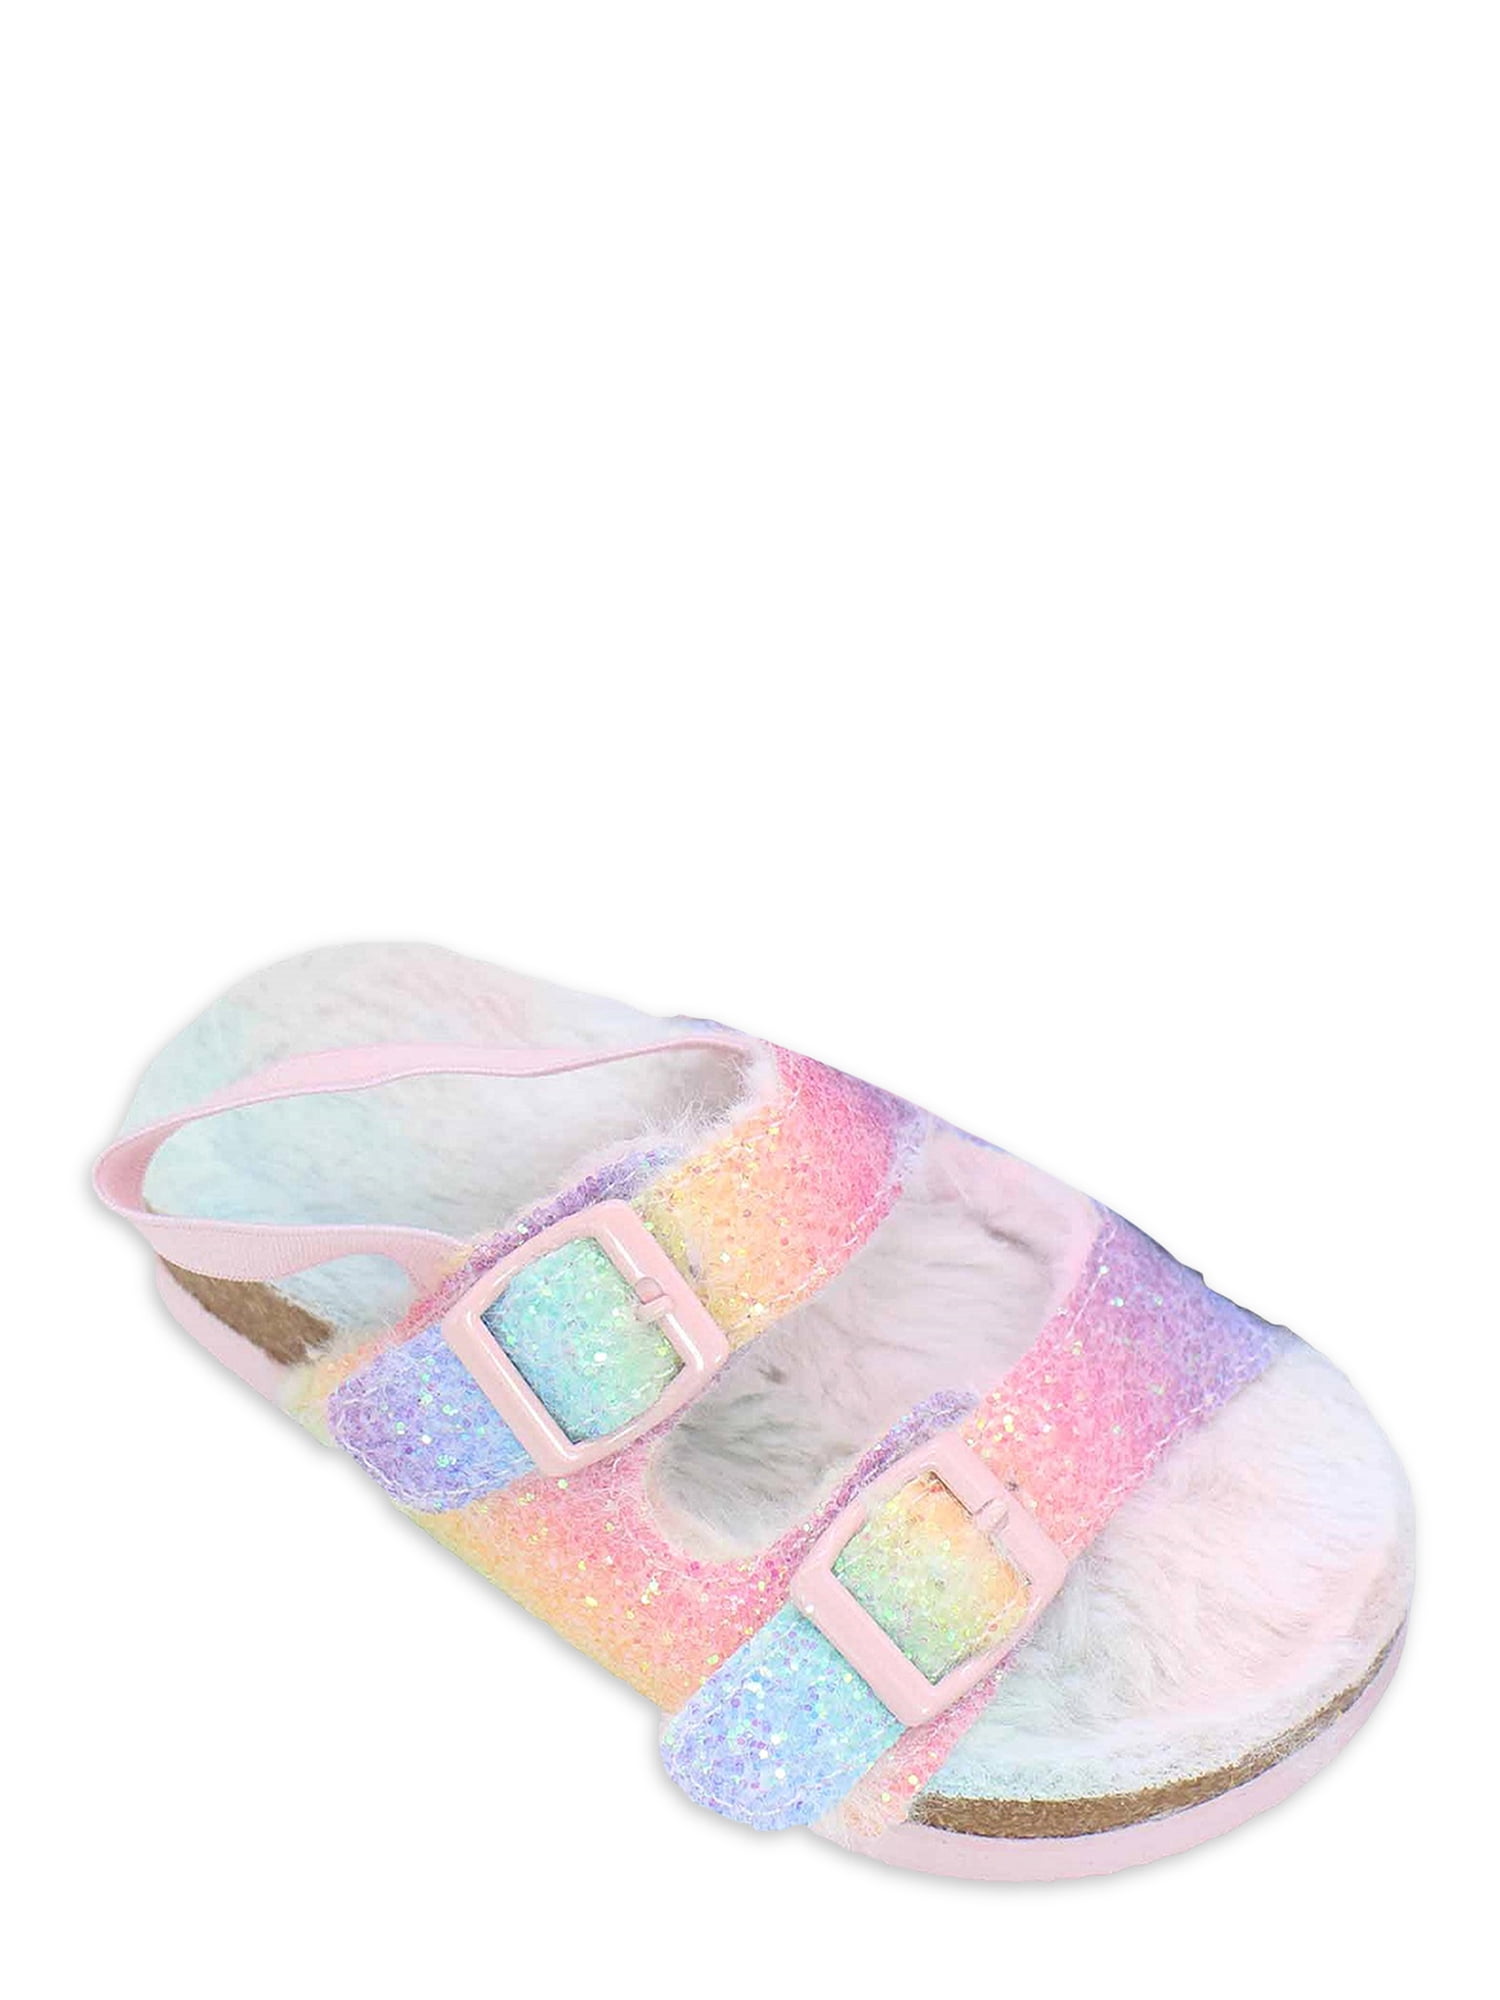 Kids Girls Faux Fur Sliders Summer Sandals Slides Beach Holiday Flip Flops Size 